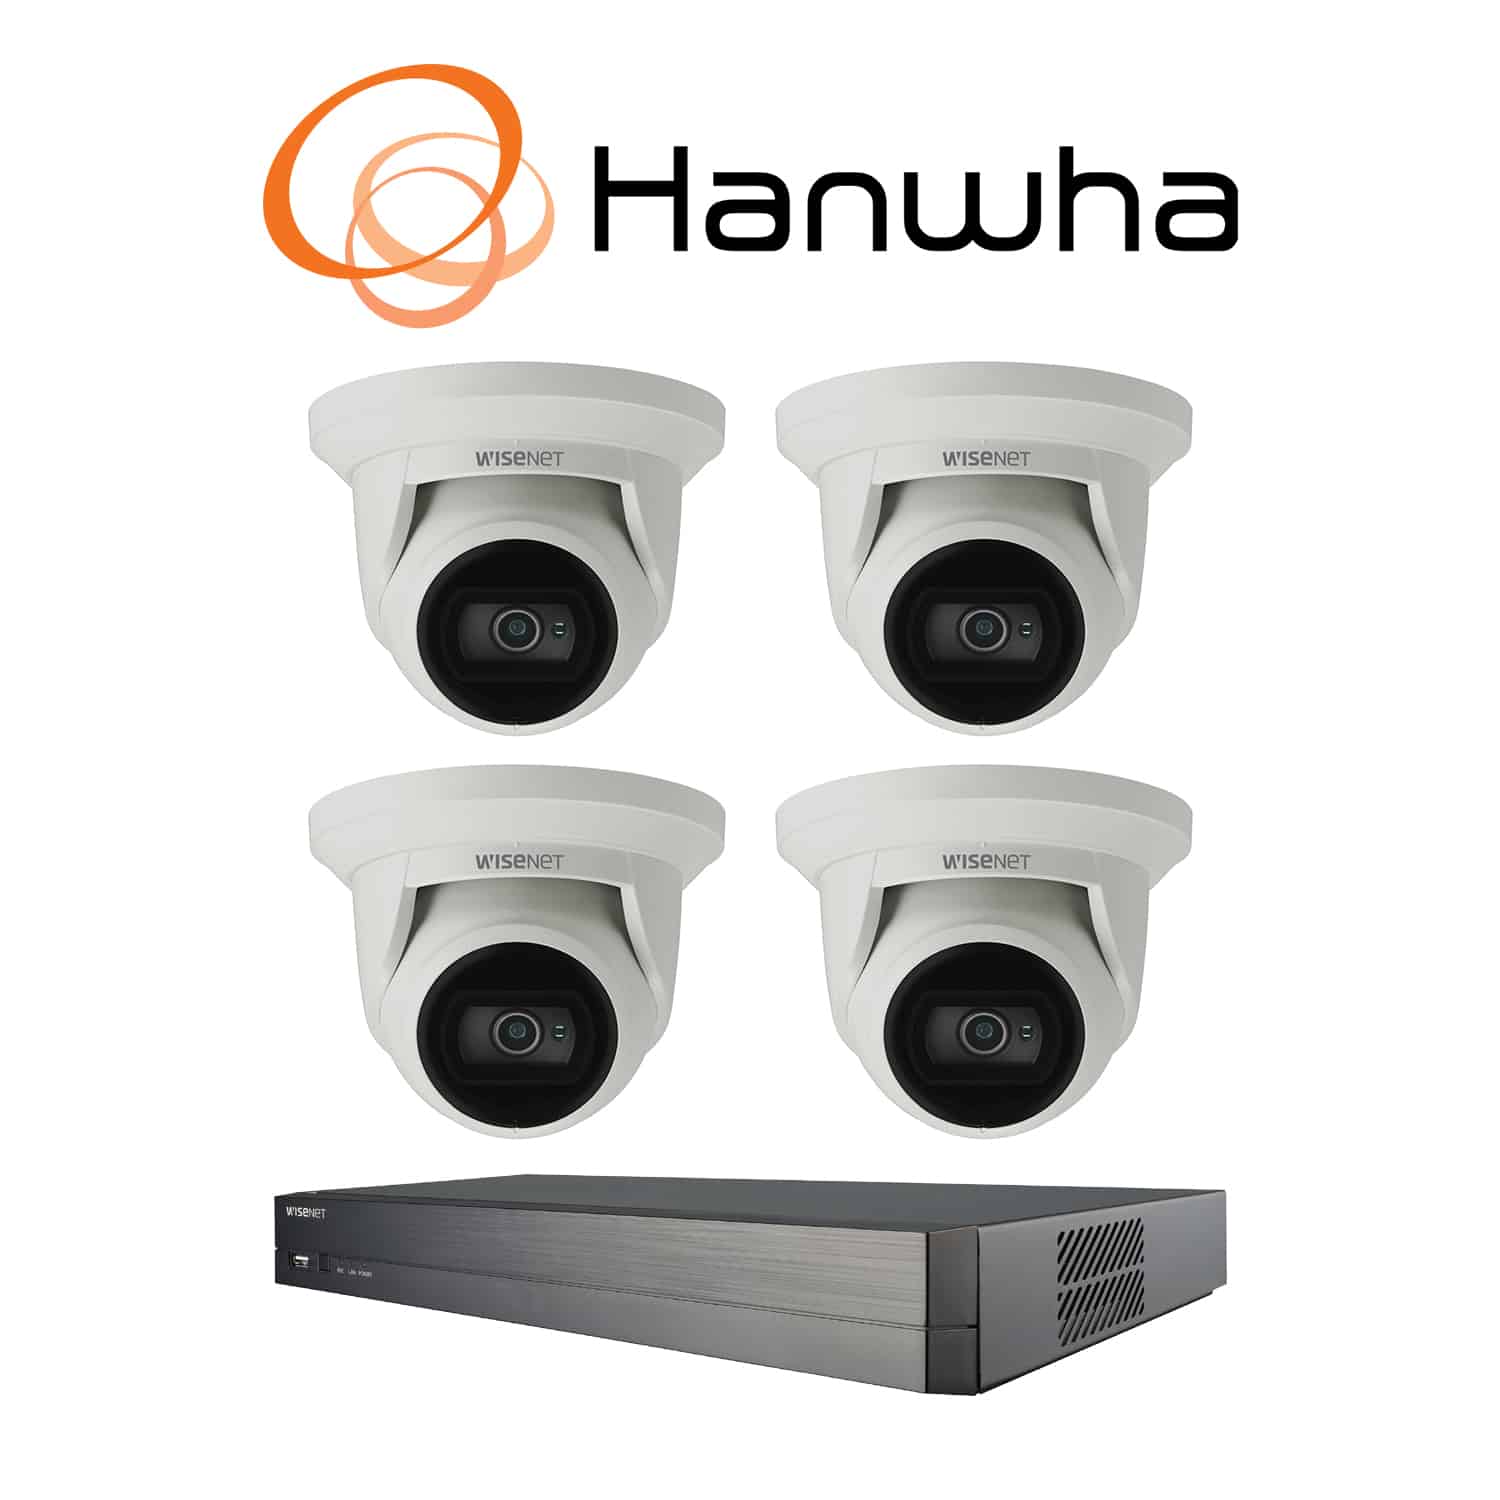 Hanwha CCTV kit